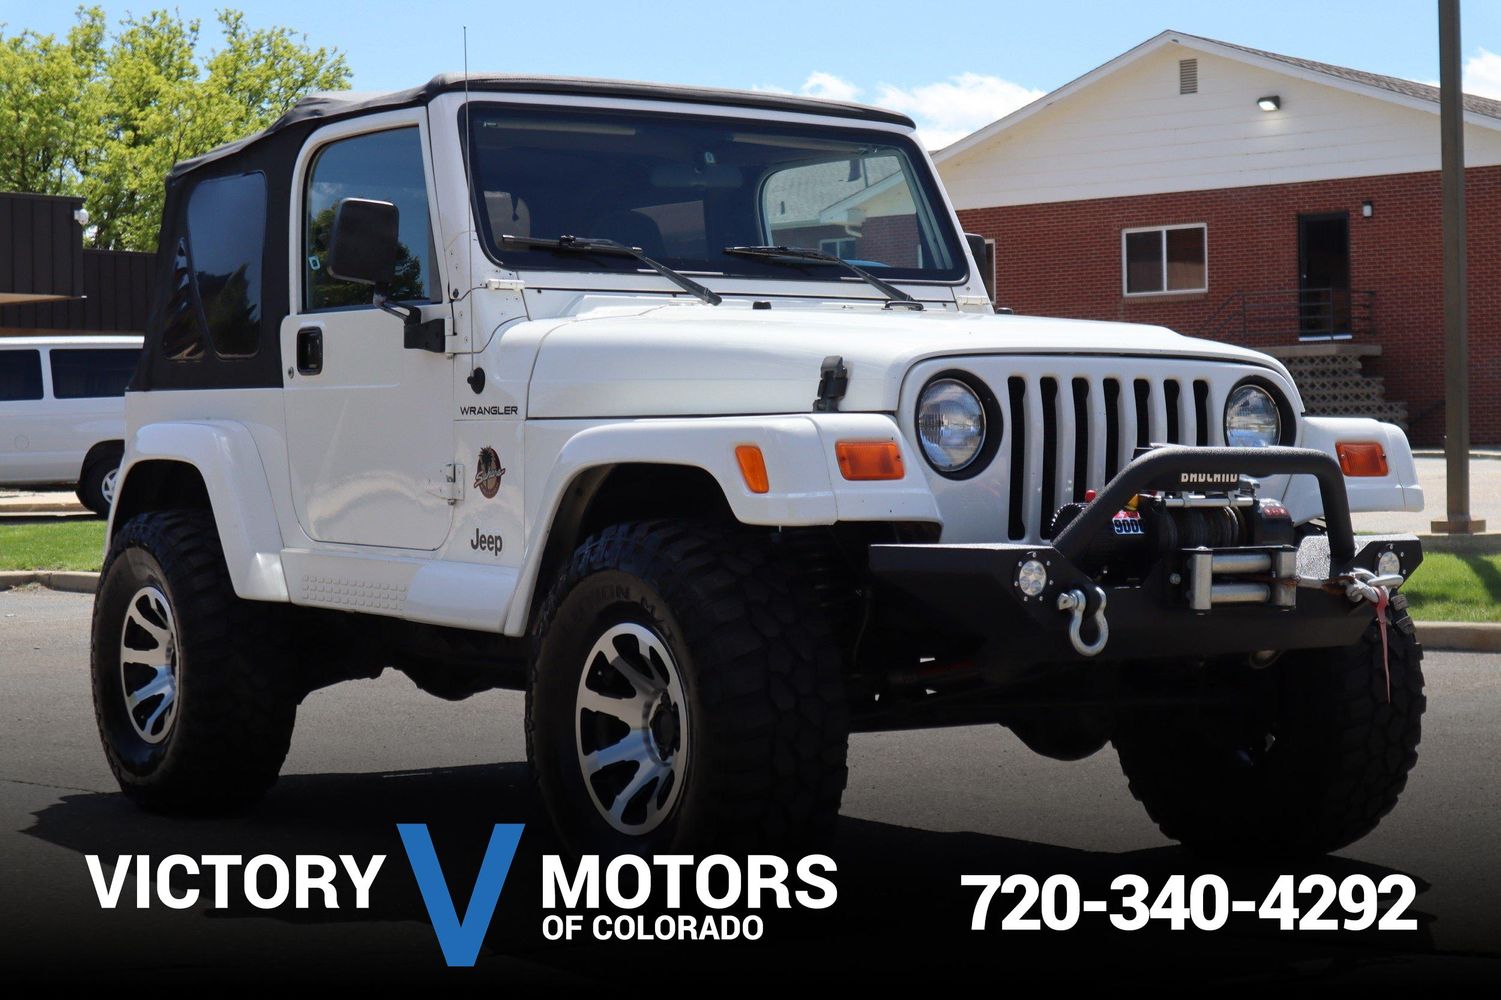 2002 Jeep Wrangler Sahara | Victory Motors of Colorado